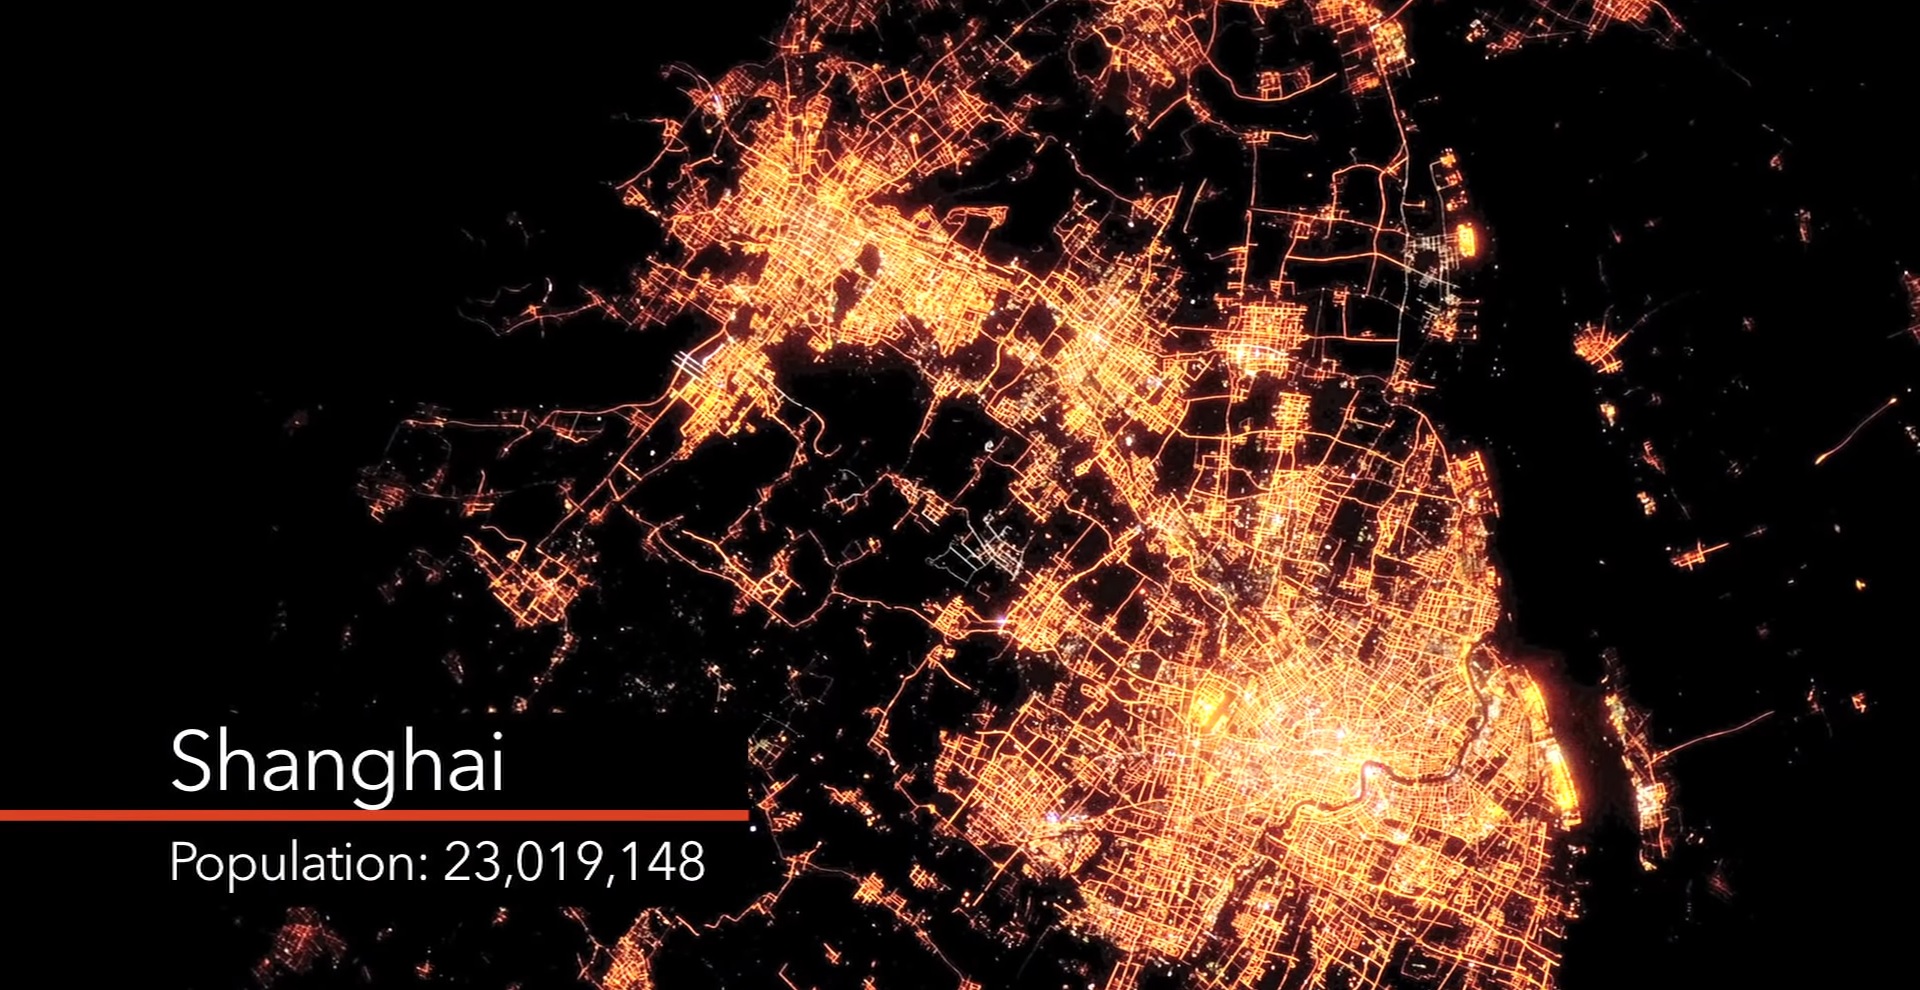 Shangai vista dall'ISS | Fonte: NASA